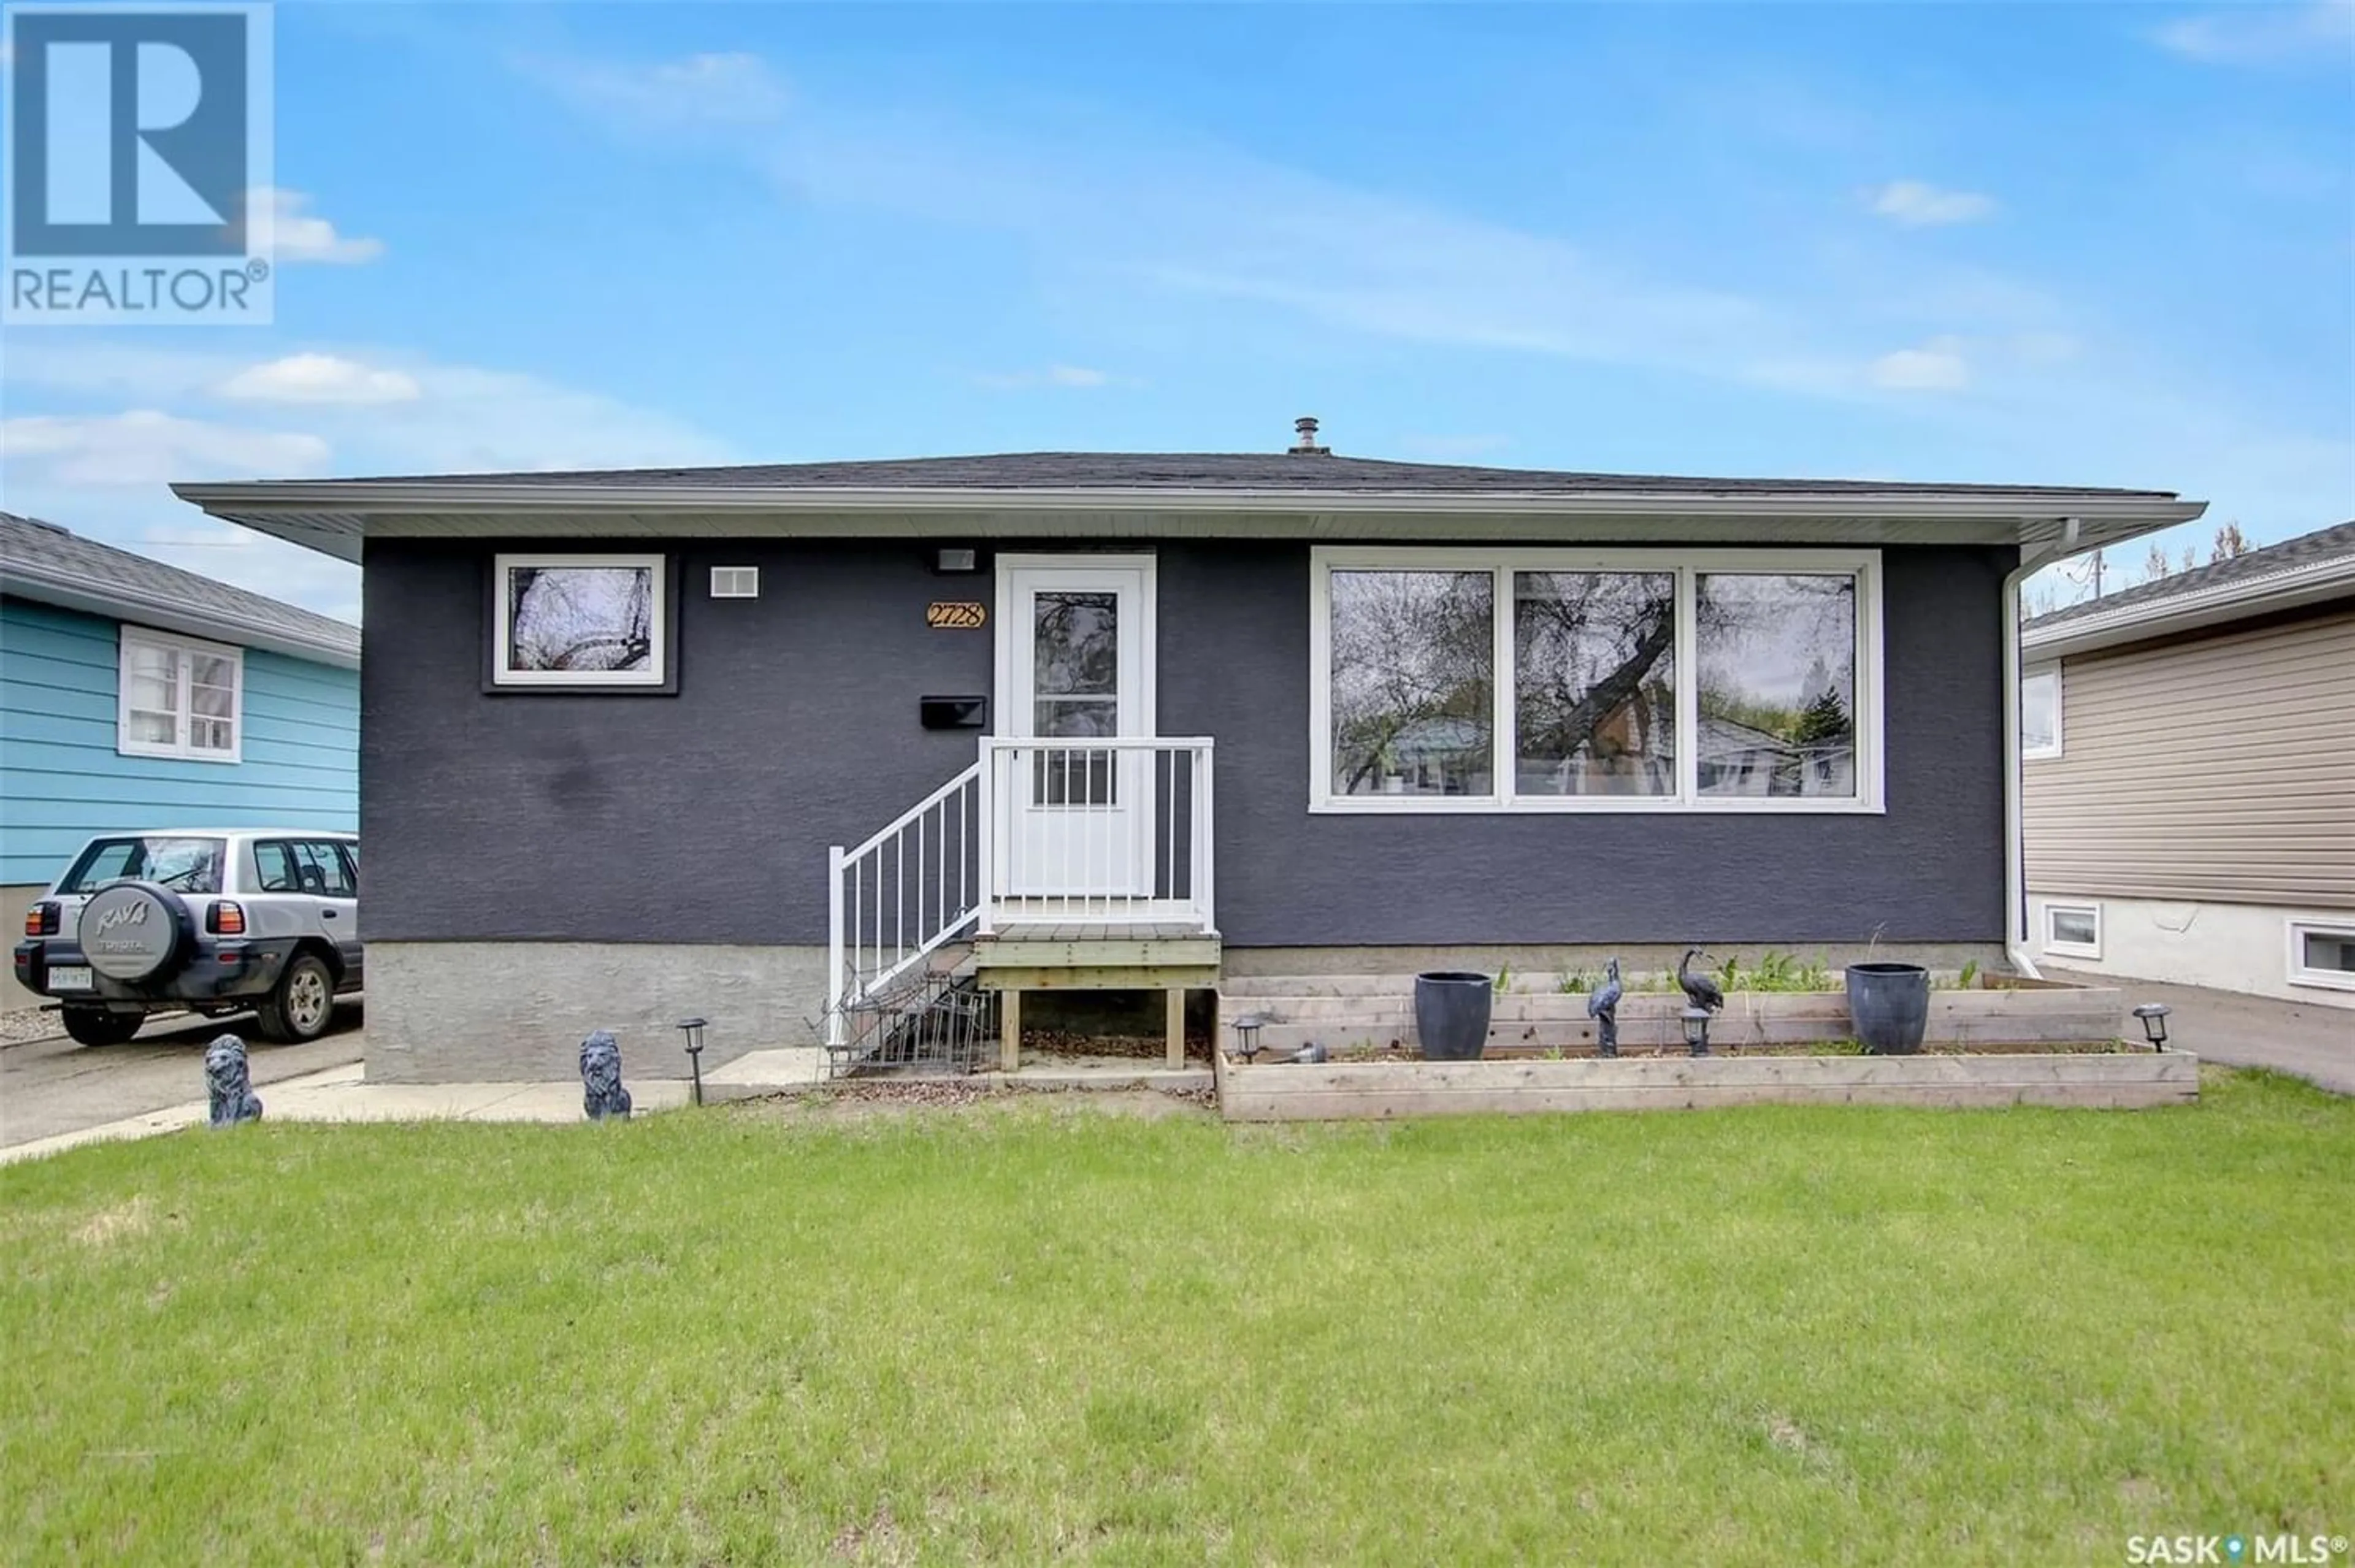 Home with vinyl exterior material for 2728 Montreal CRESCENT, Regina Saskatchewan S4P2W5